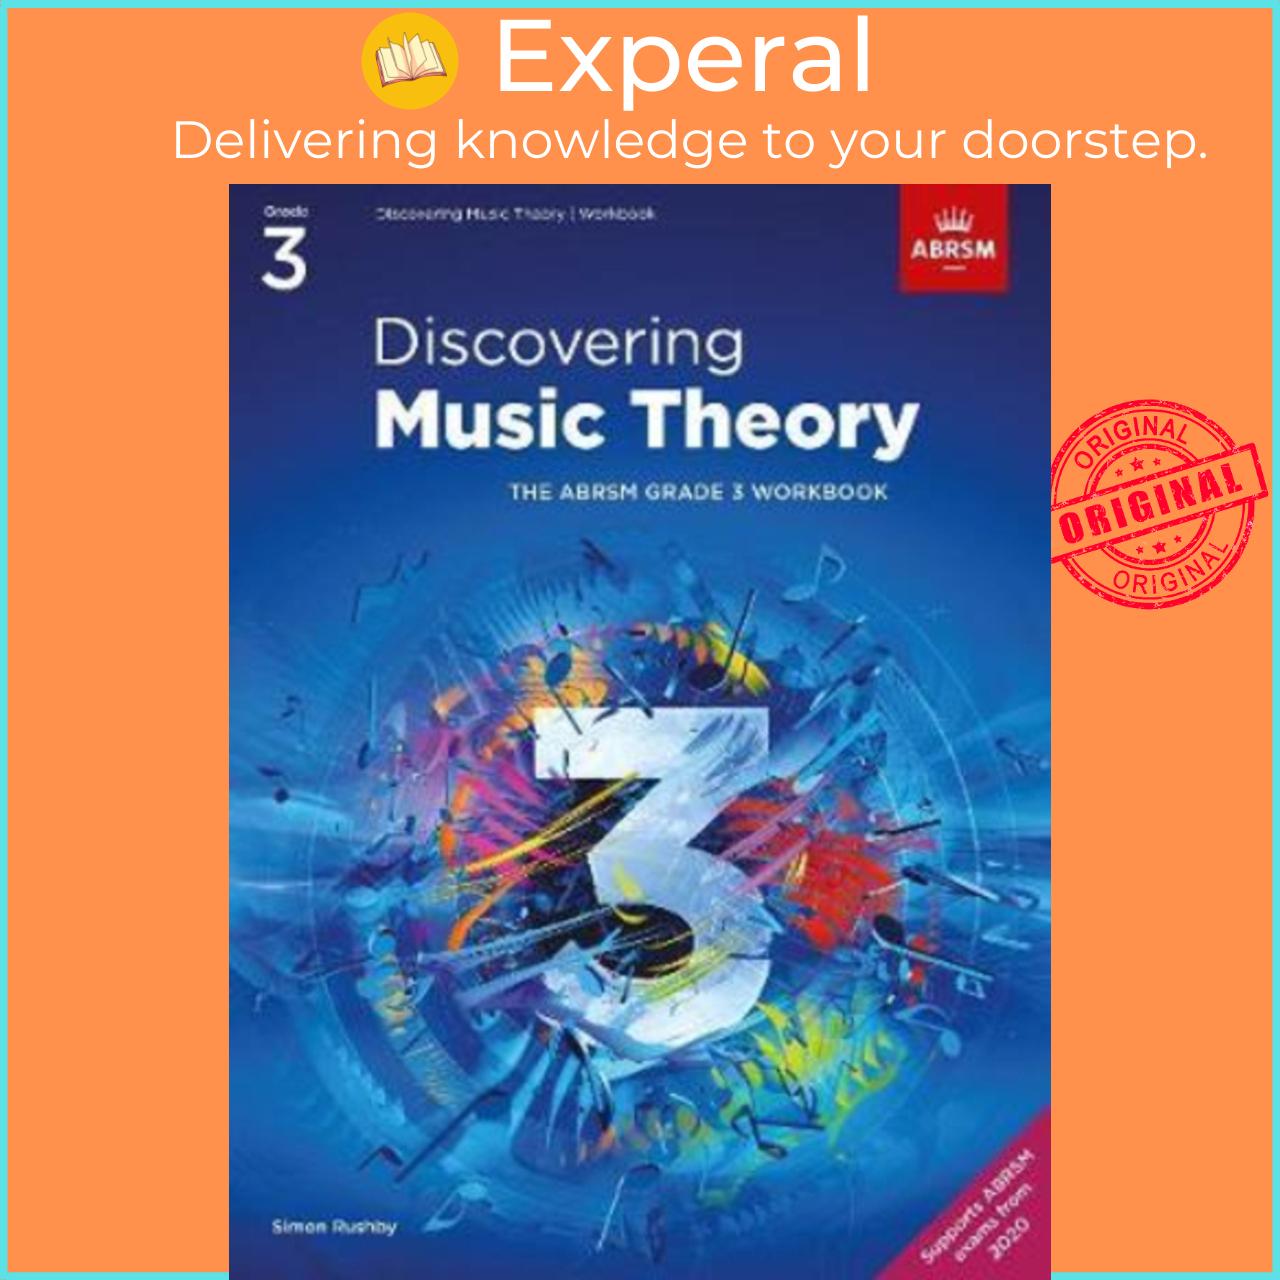 Sách - Discovering Music Theory, The ABRSM Grade 3 Workbook by ABRSM (UK edition, paperback)